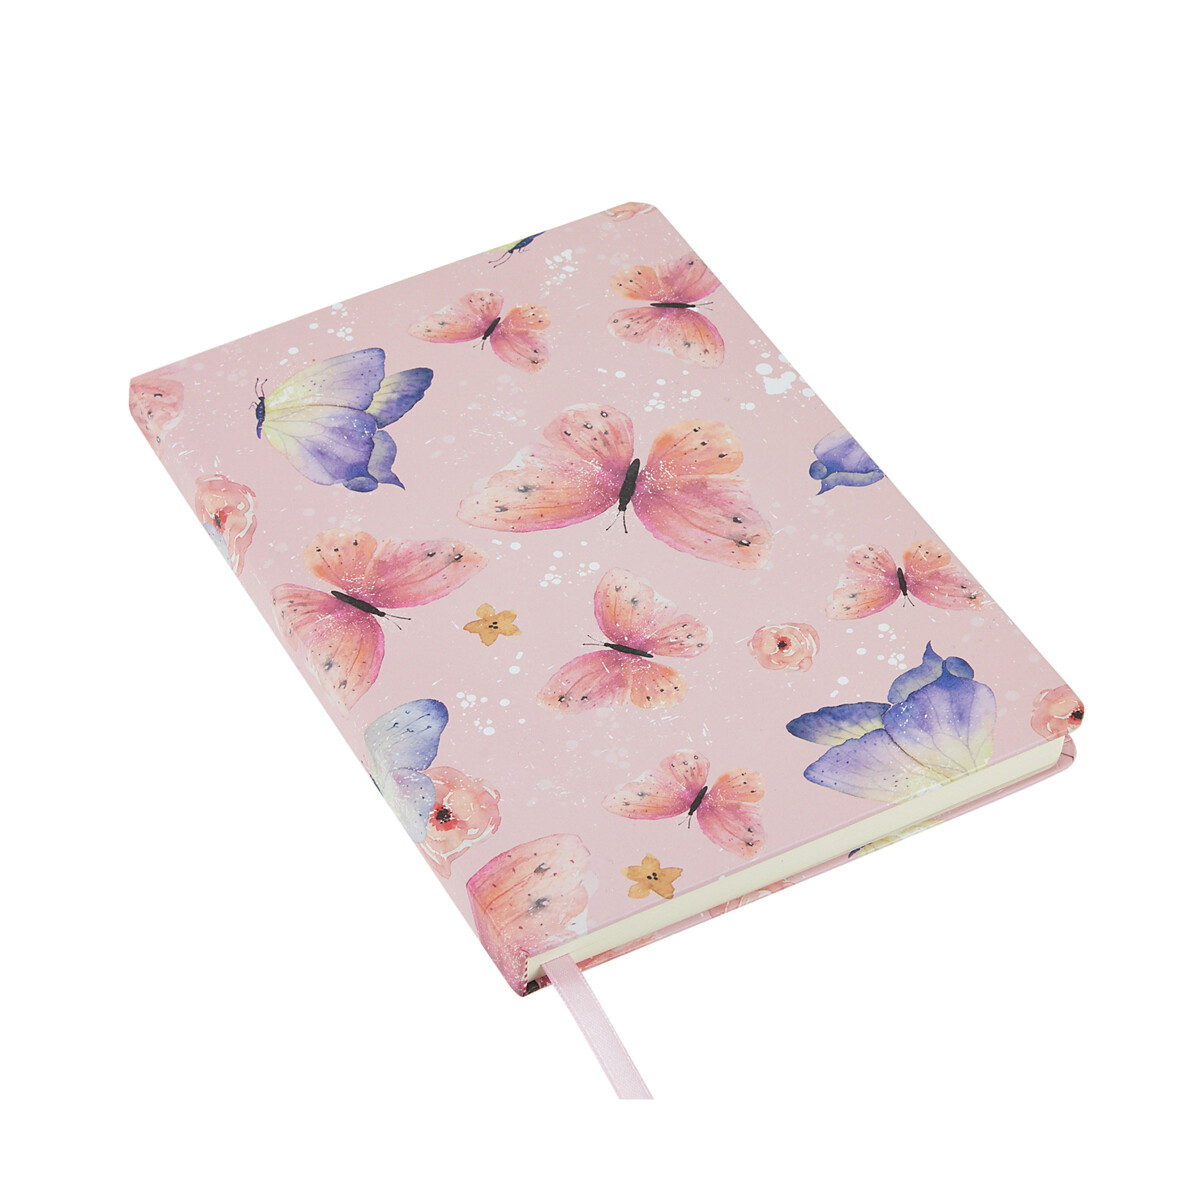 Butterfly - Hardbound Lined Journal A5 Notebook